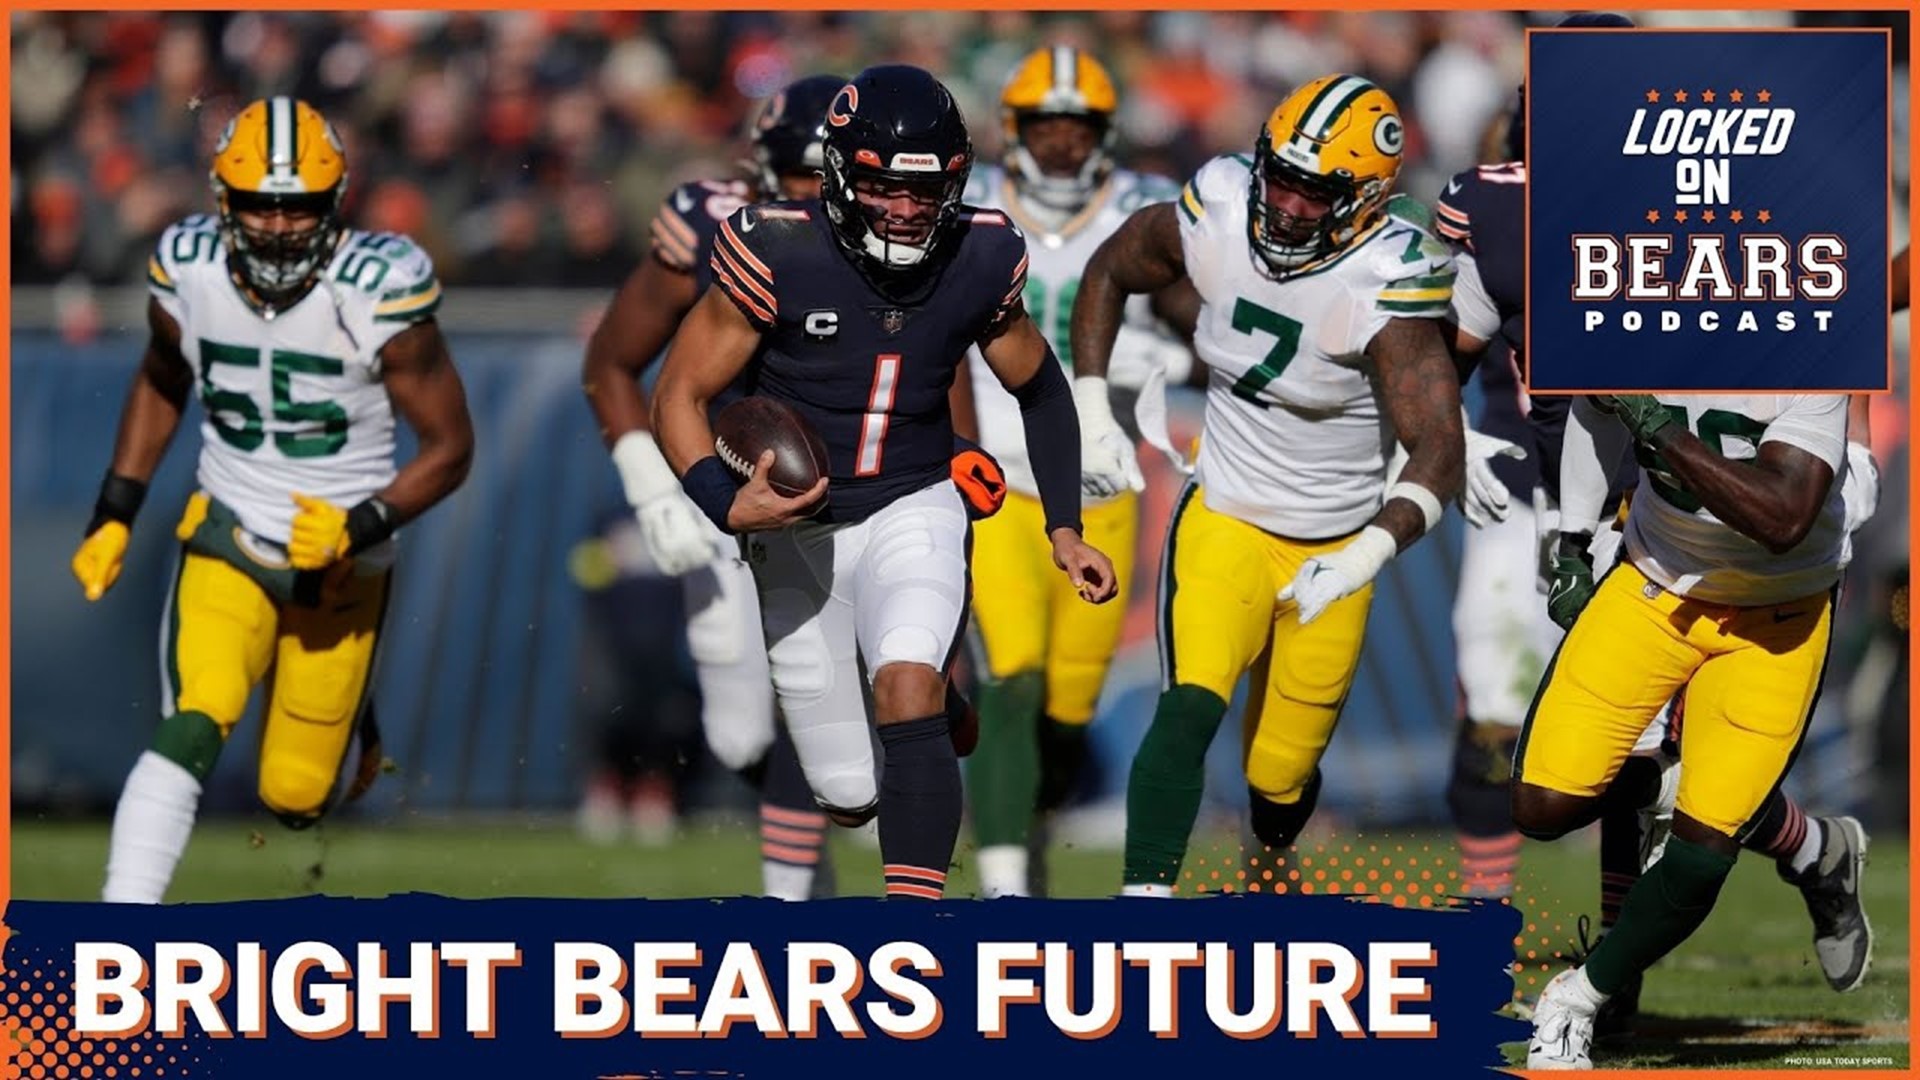 bears future draft picks